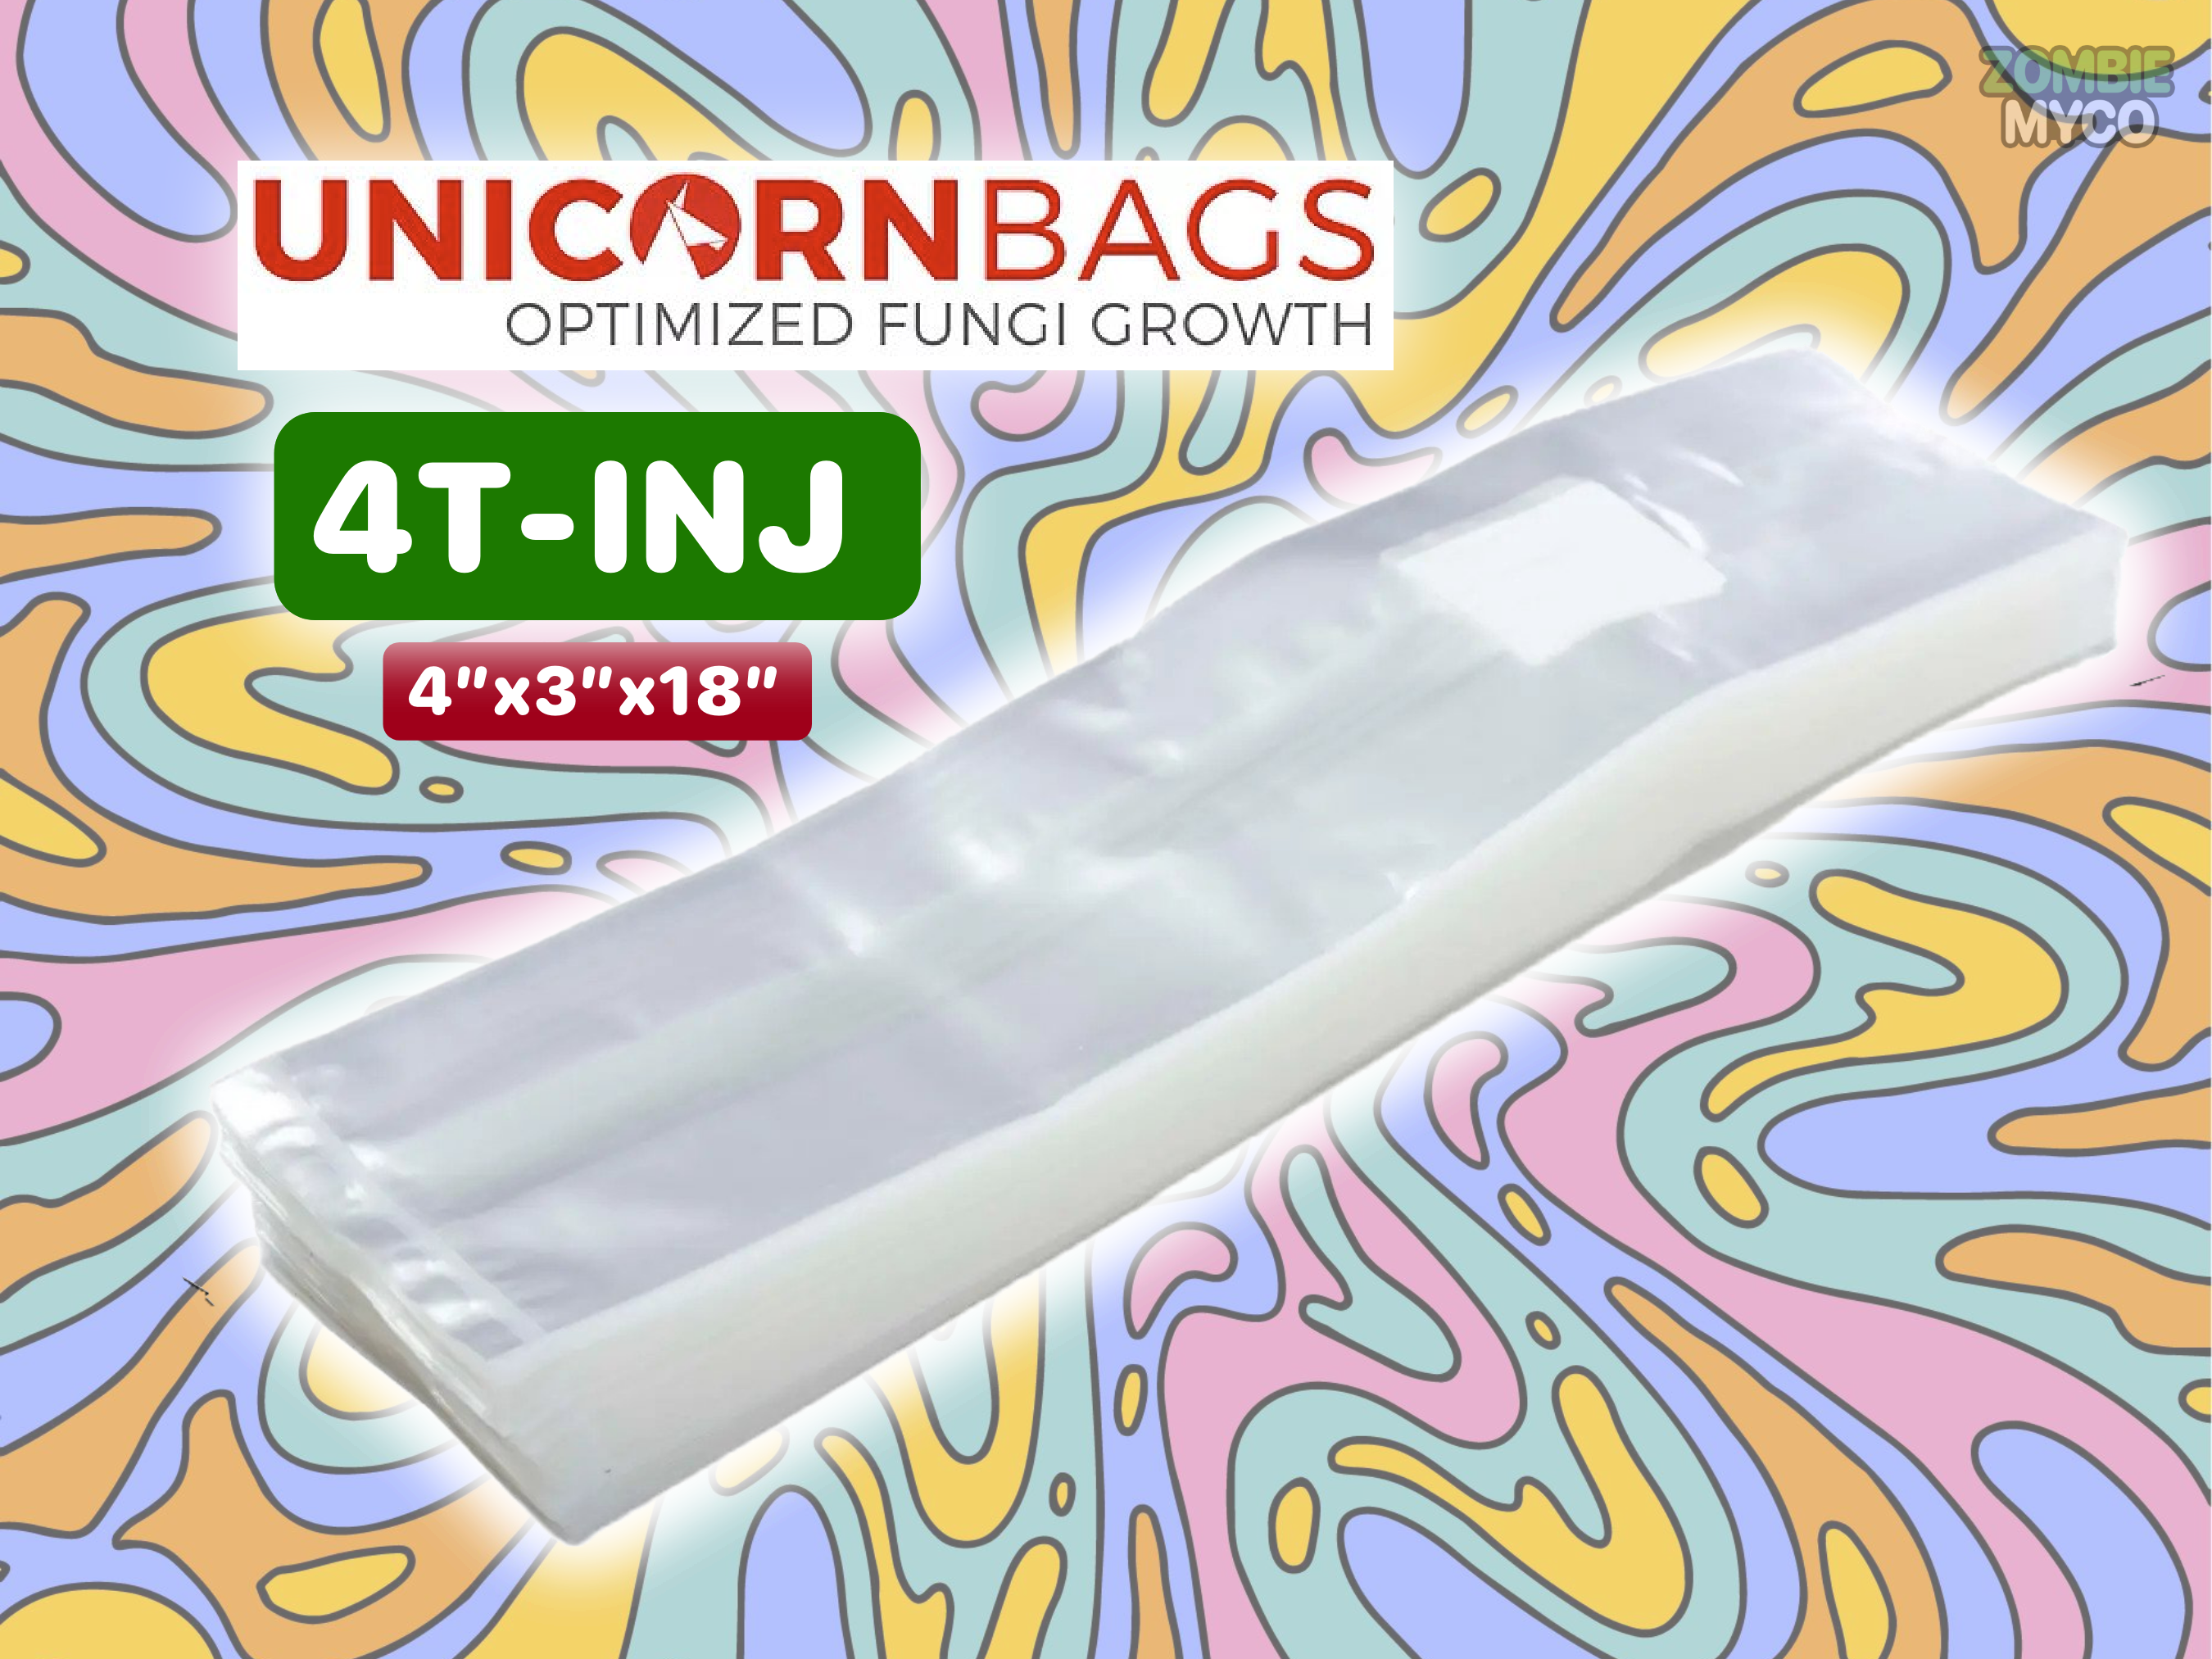 a sample of 4T - INJ Unicorn bags